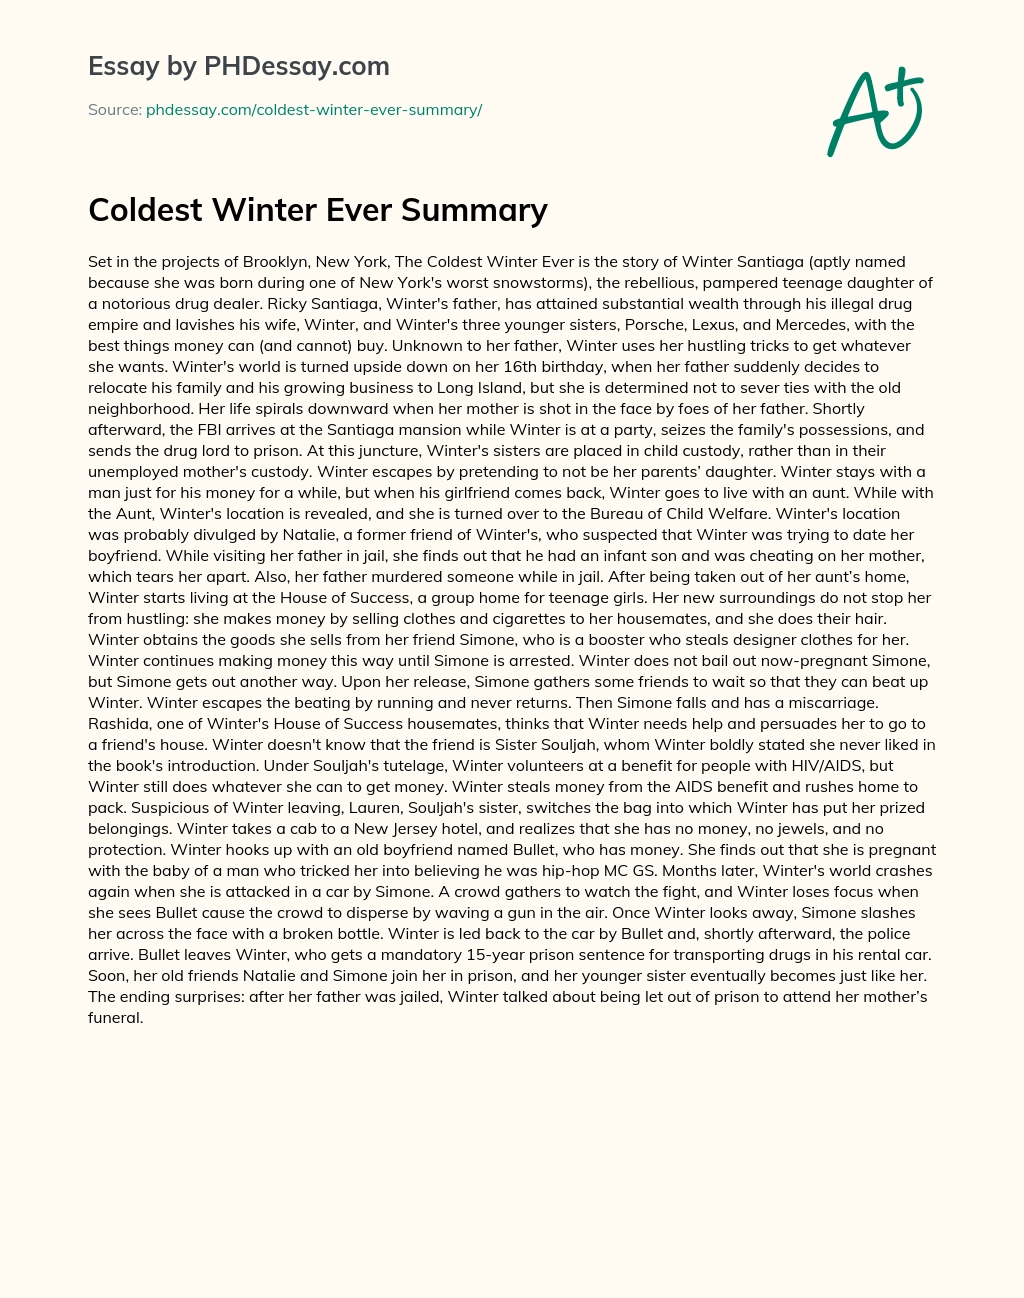 Coldest Winter Ever Summary essay